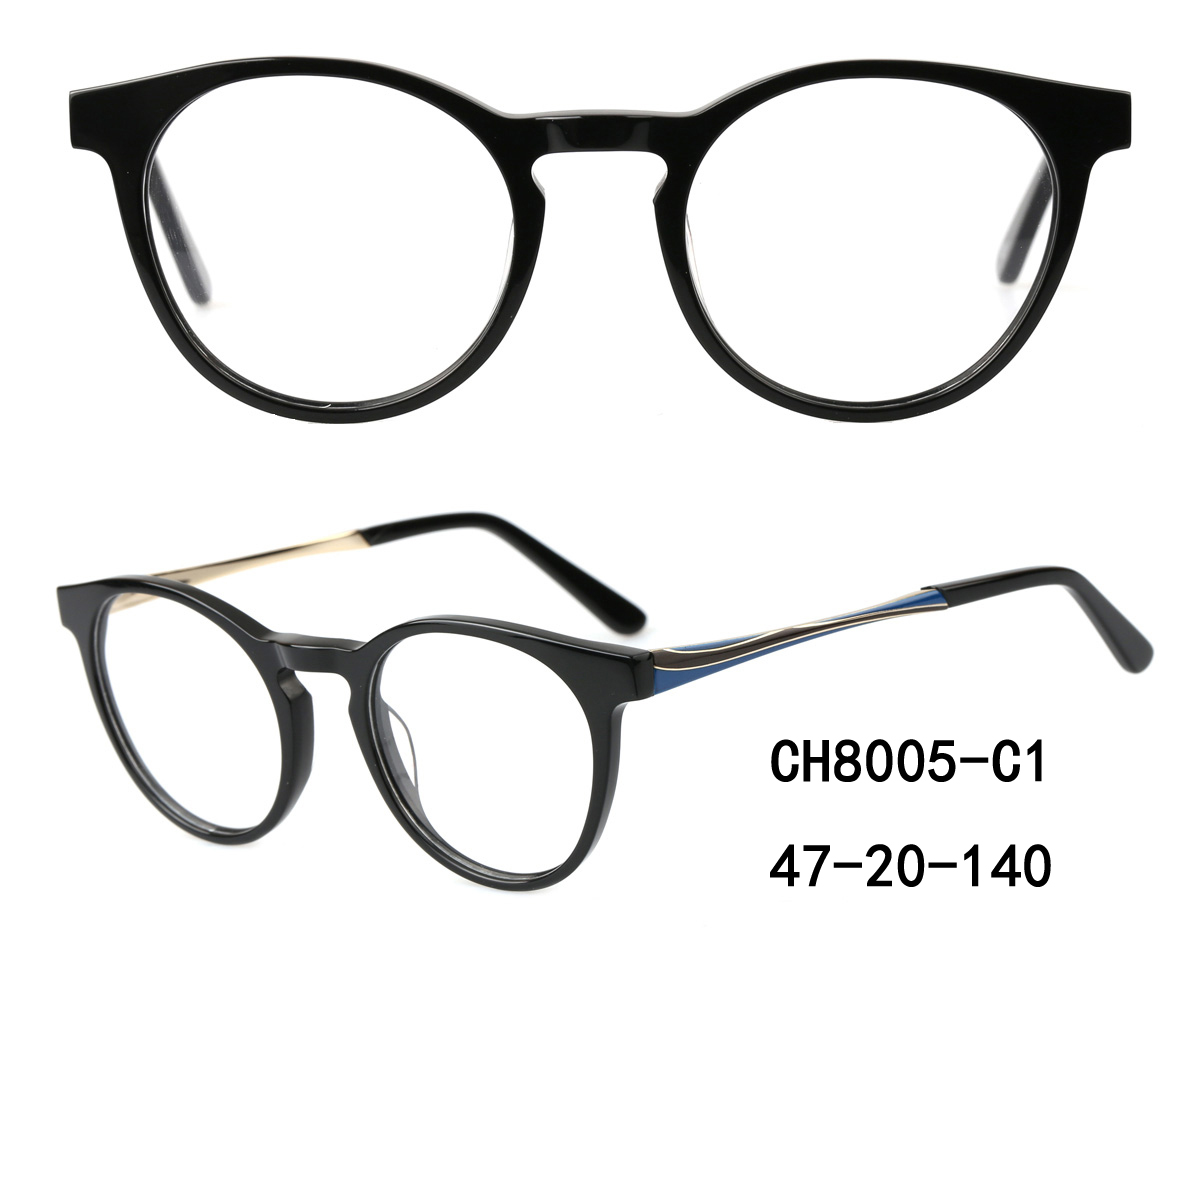 Round Acetate Optical Frames Oem Odm,Eyeglasse Spectacle Frames With Printing